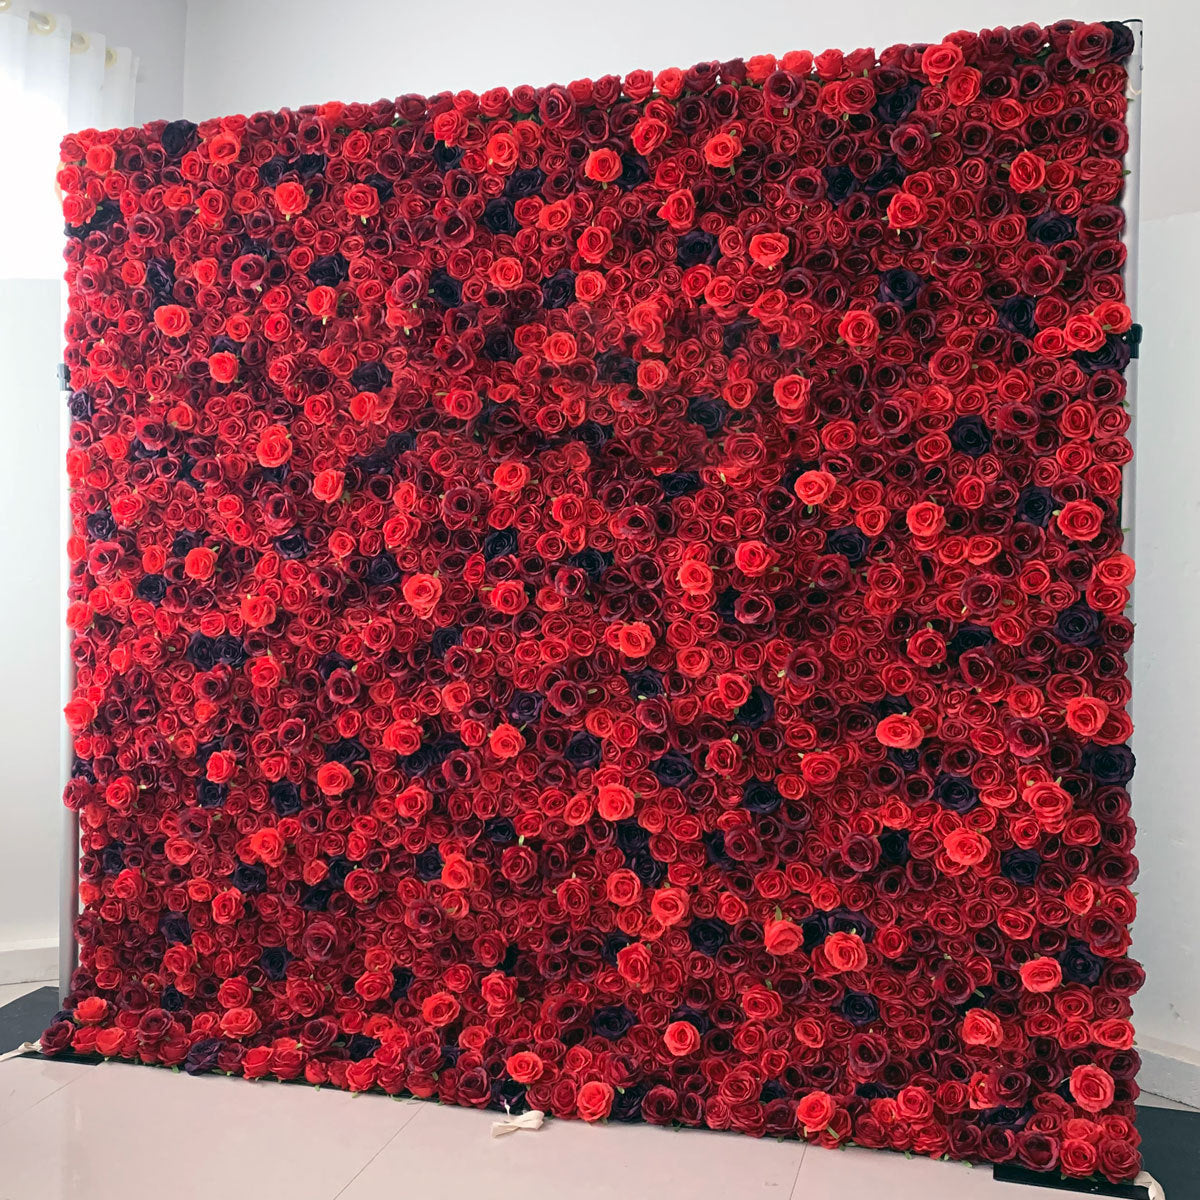 3D Artificial Flower Wall Arrangement Wedding Party Birthday Backdrop Decor HQ1165